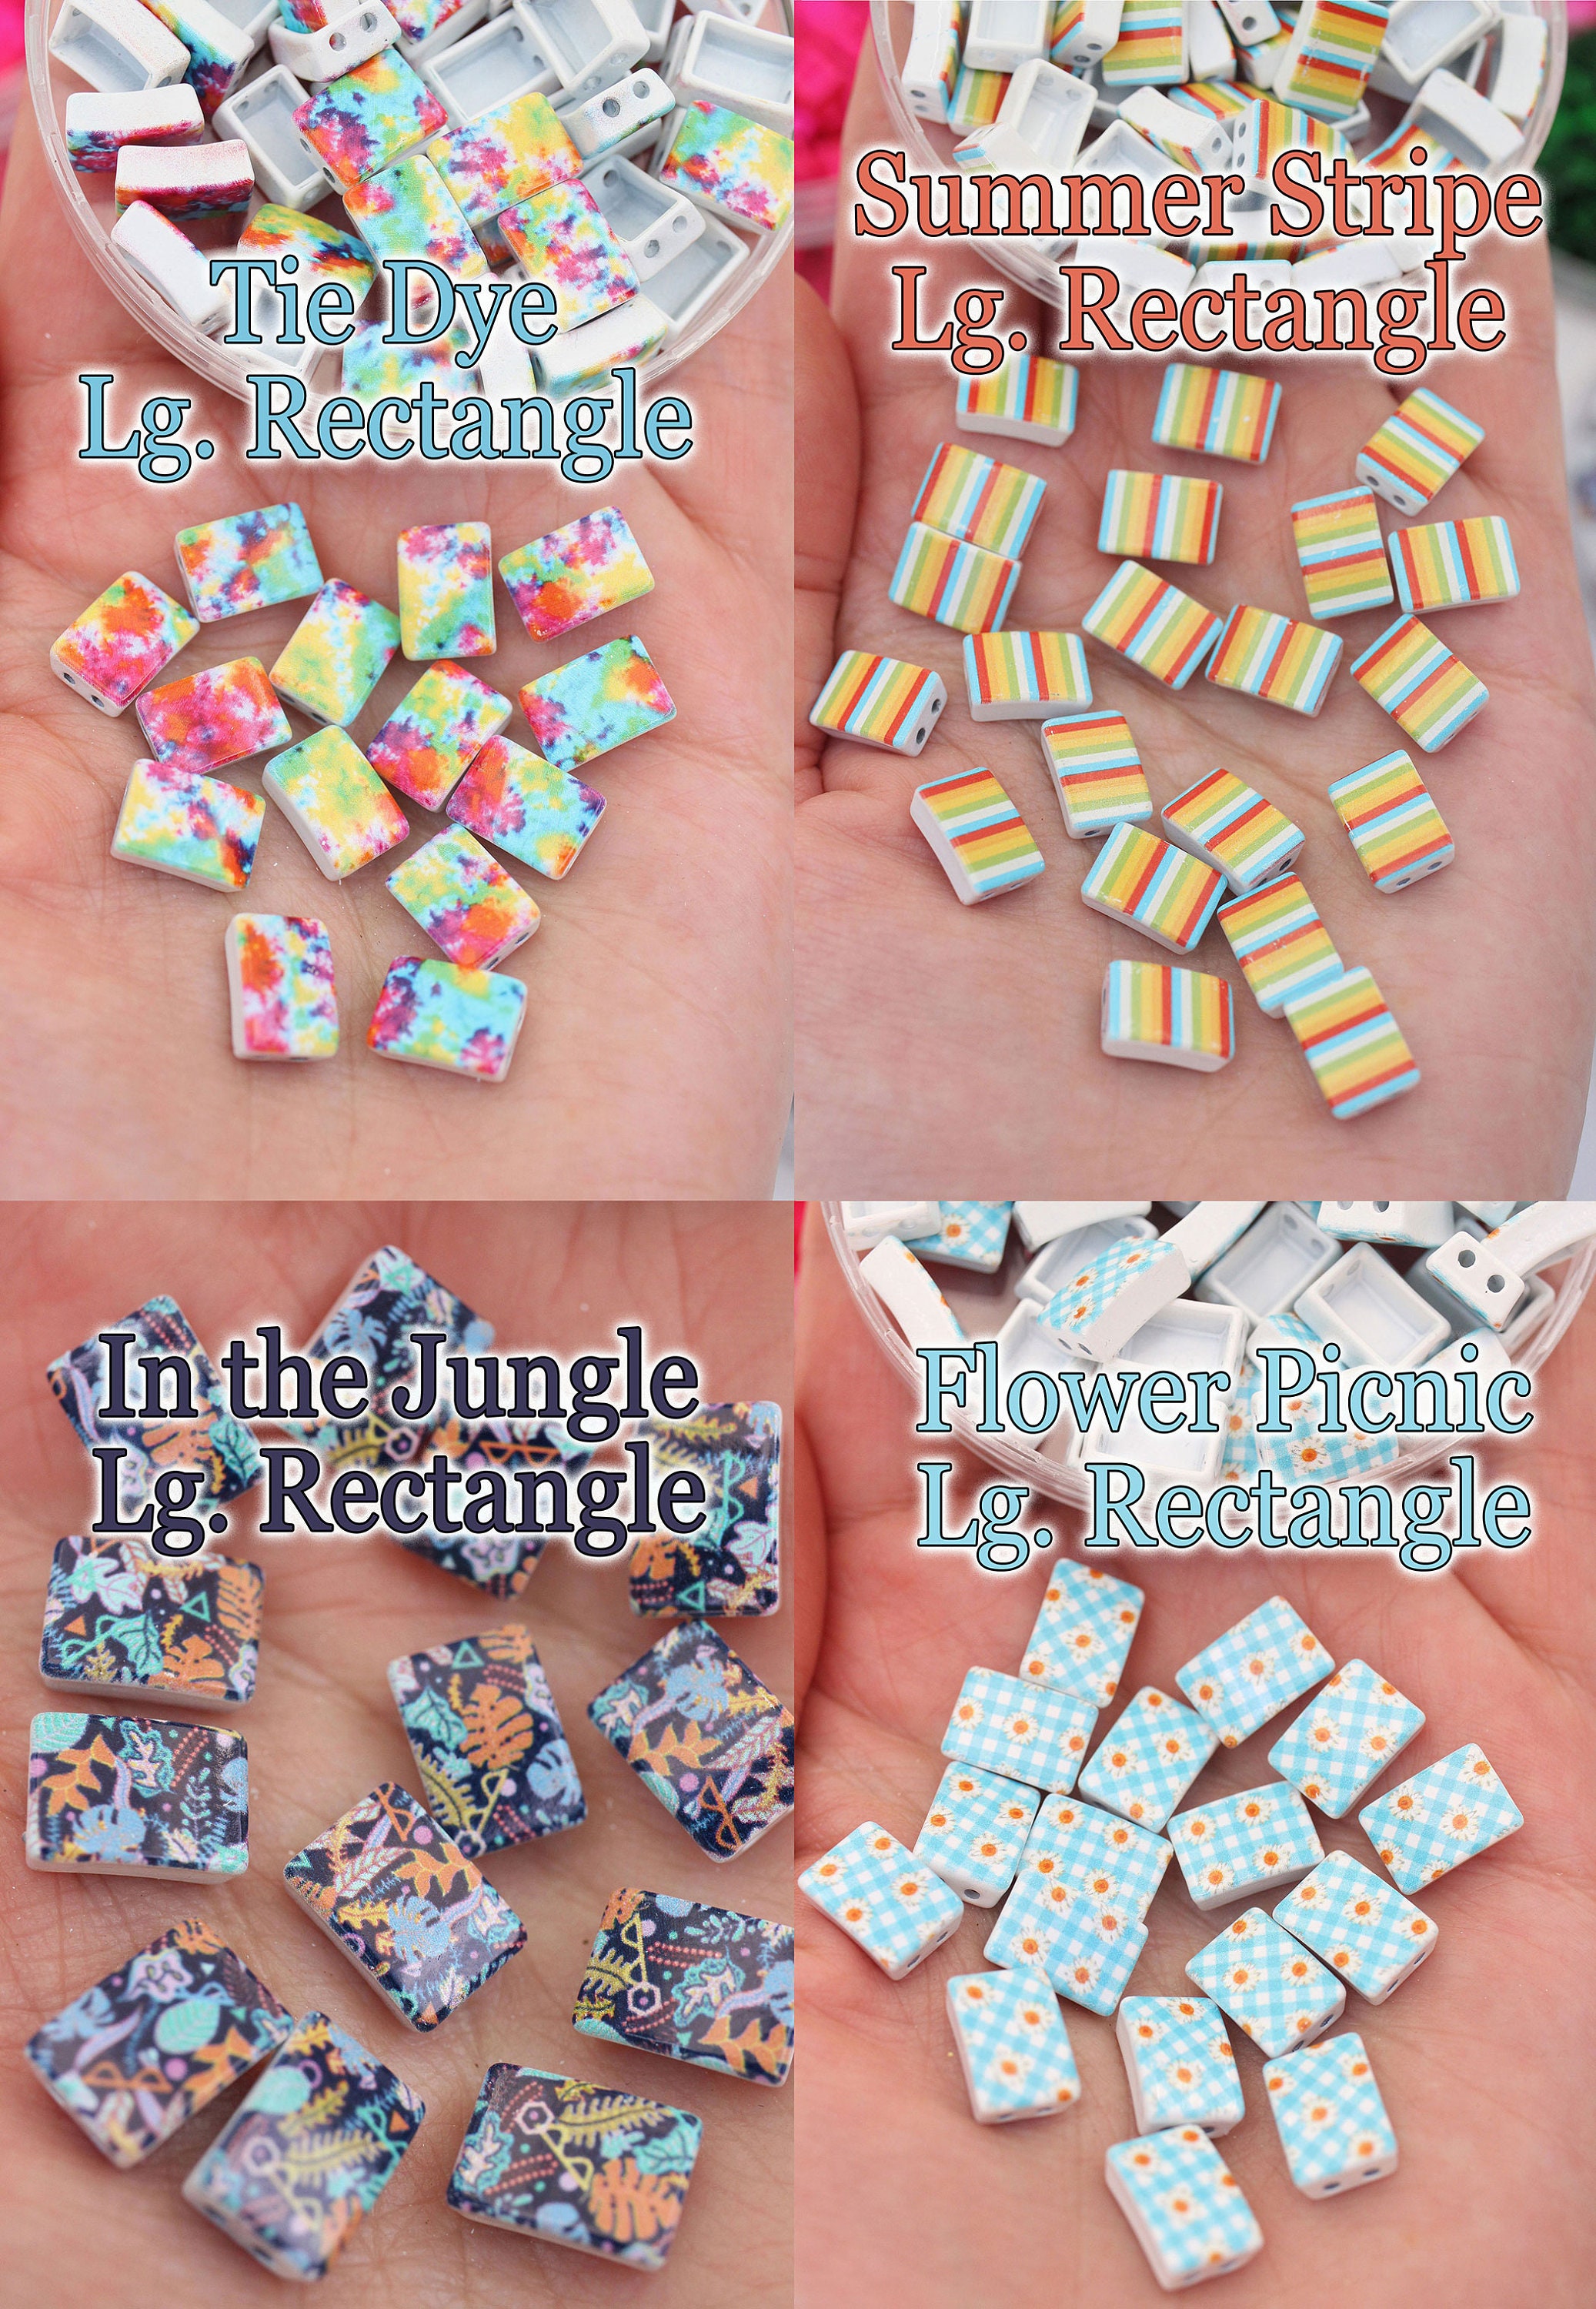 Alphabet Enamel Tile Beads, Rectangle & Square 2-hole Letter Beads for  Bracelets, DIY Trendy Tila Name Bracelet Making Supplies, 5 Pcs 